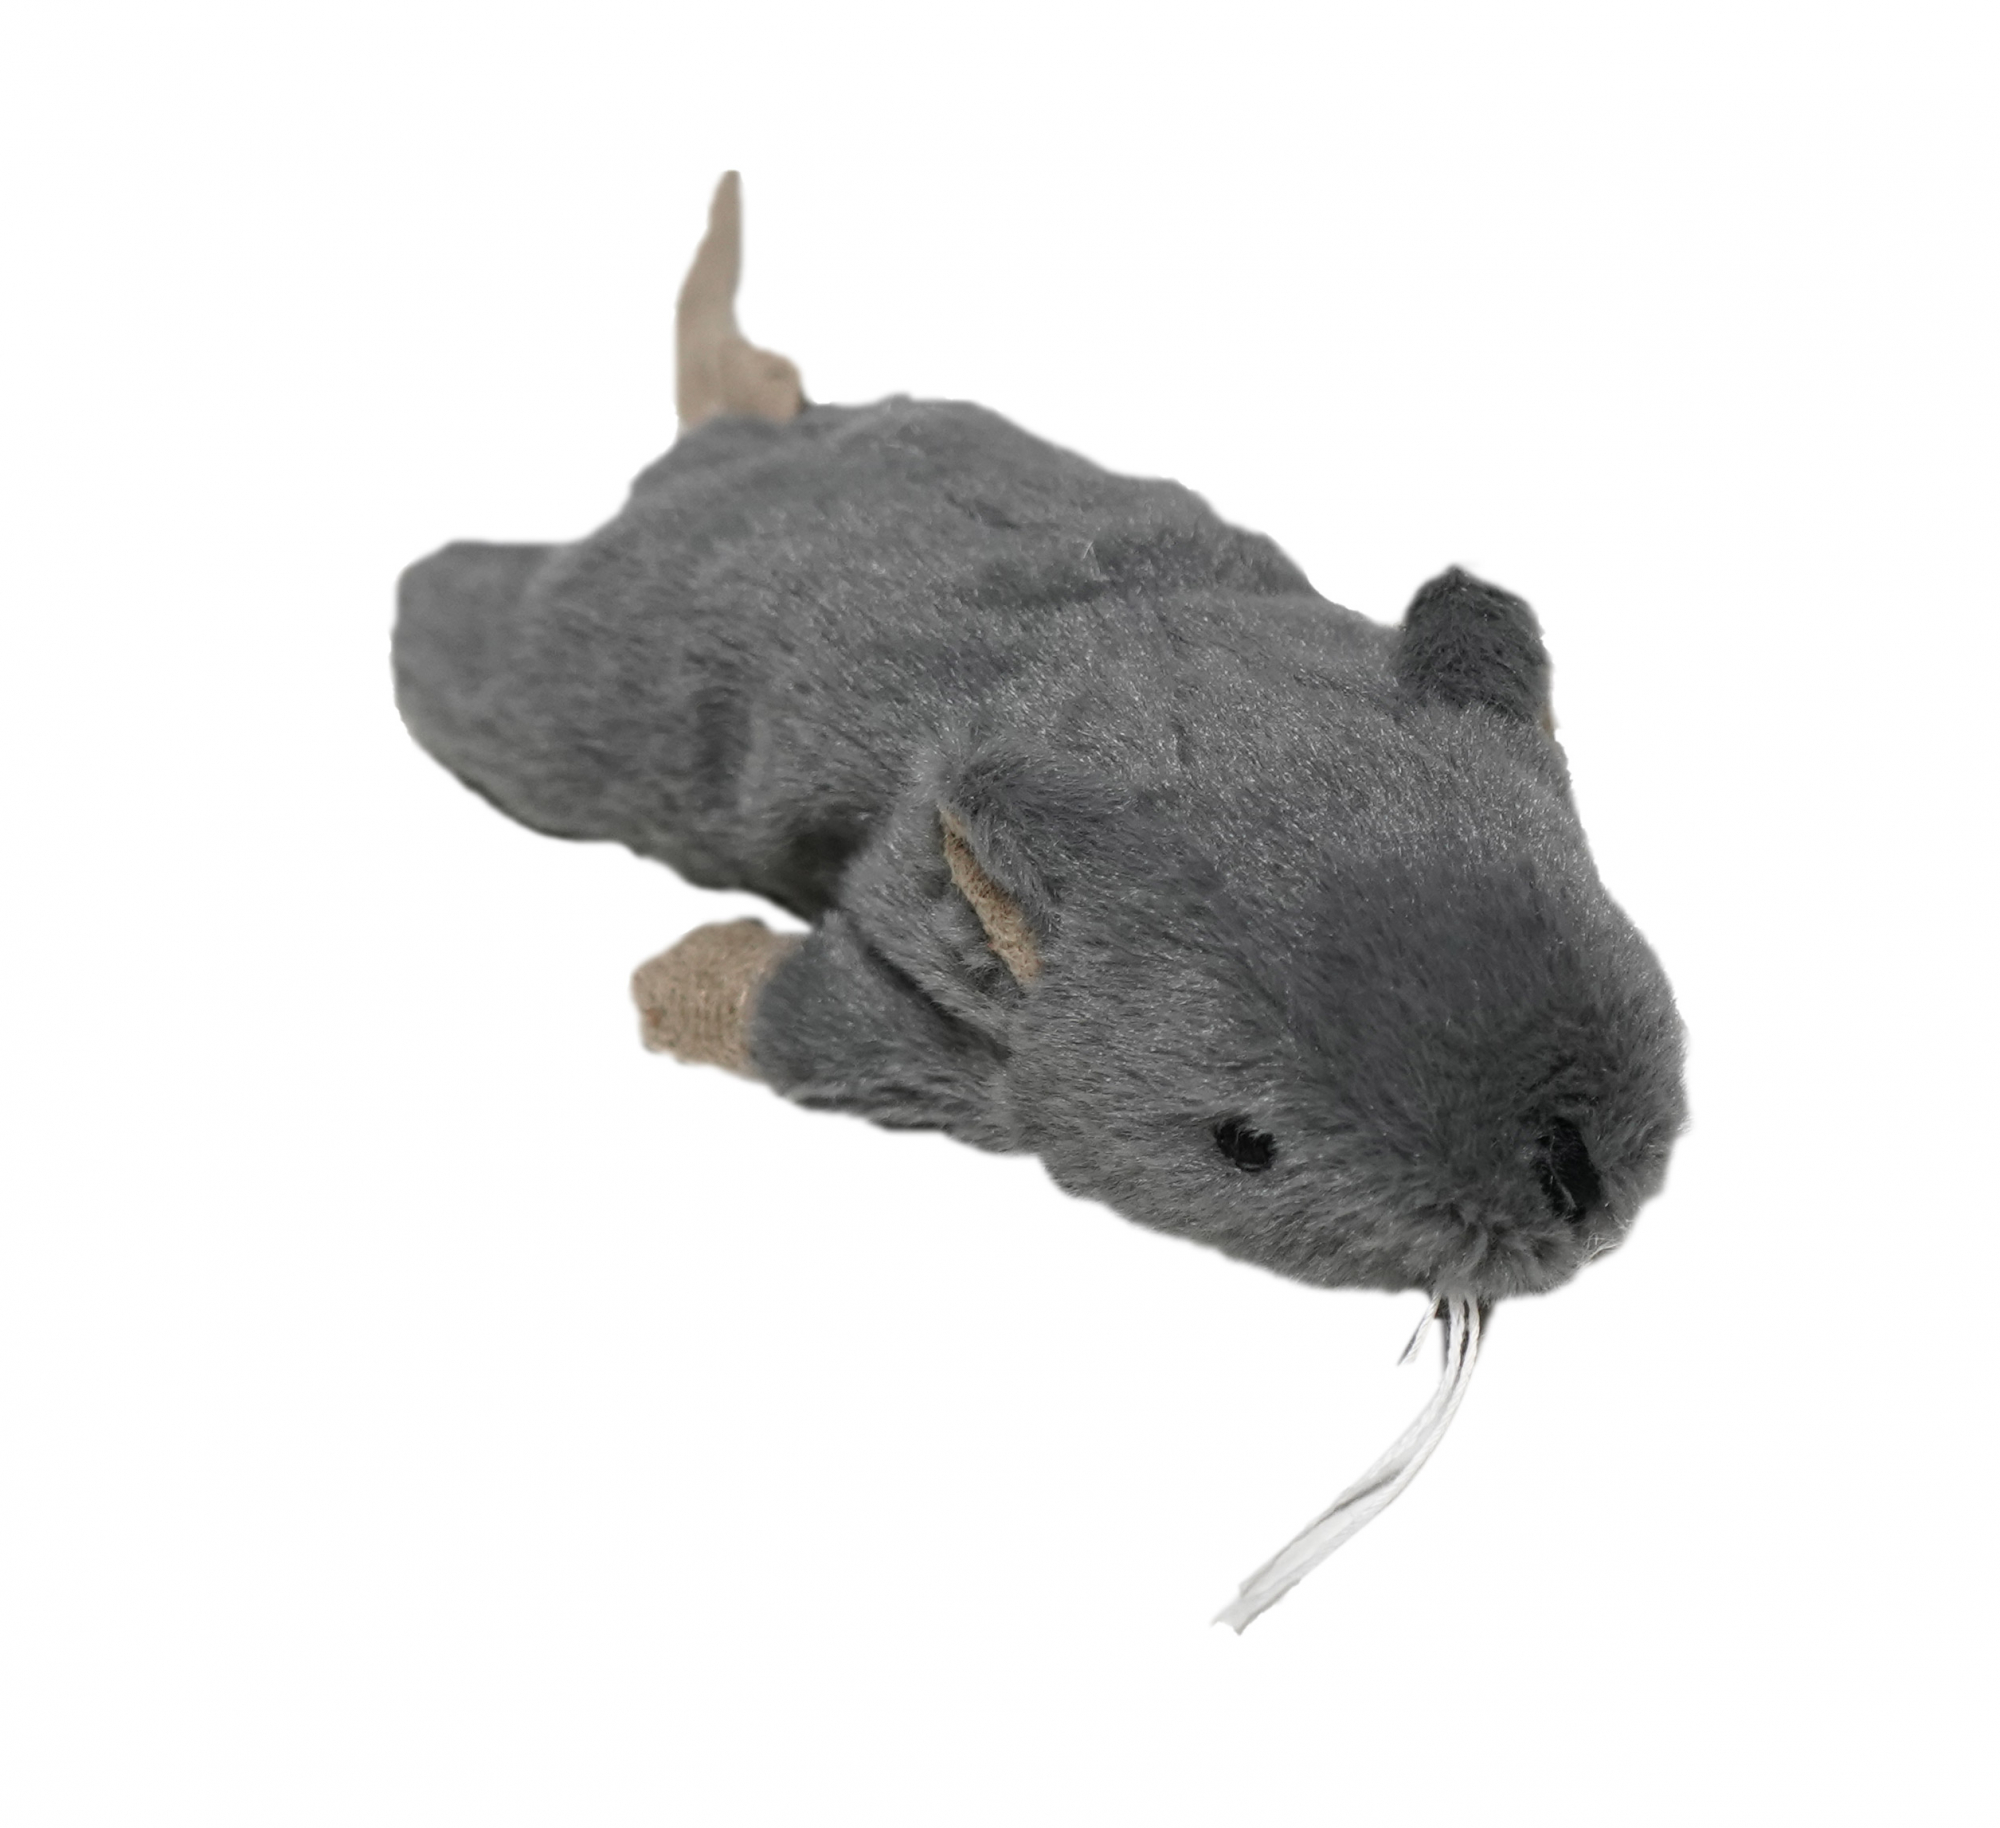 Grote muis met crinckle papier en catnip Tyrol